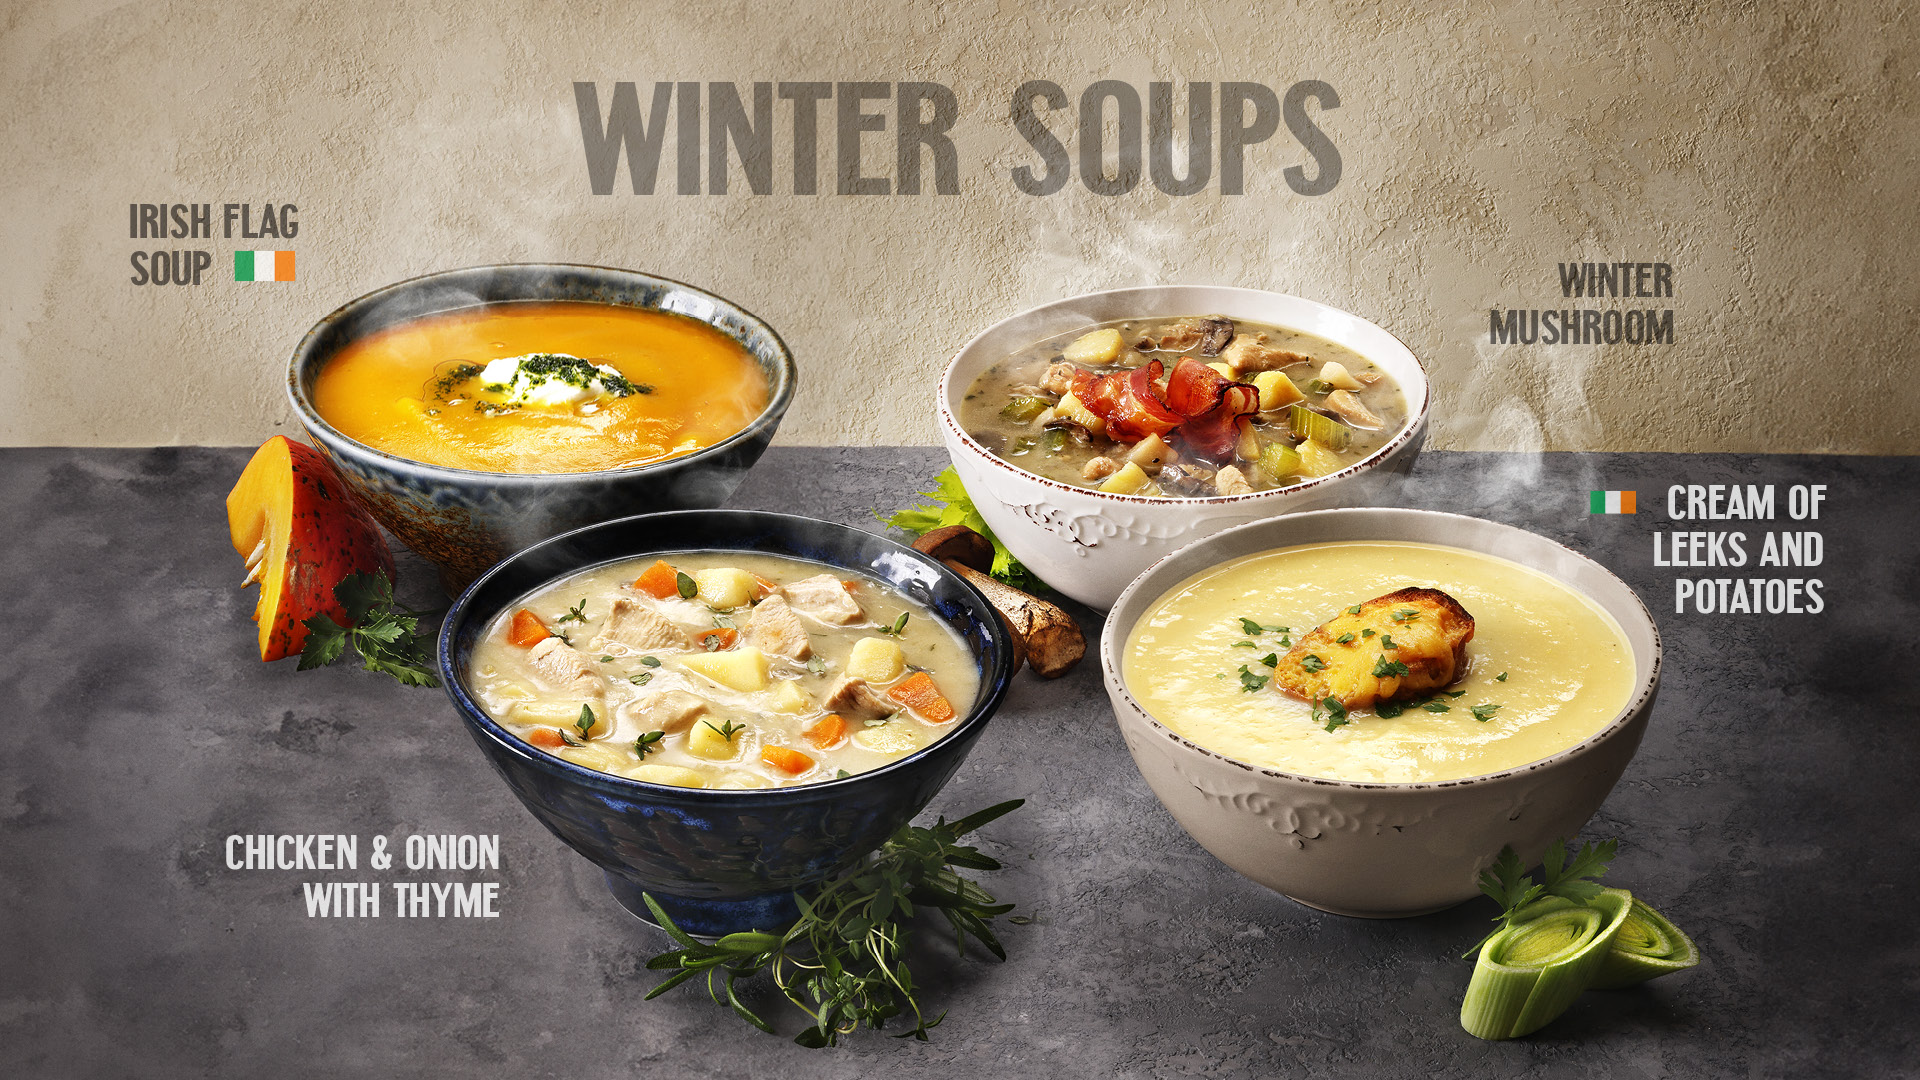 Winter soups